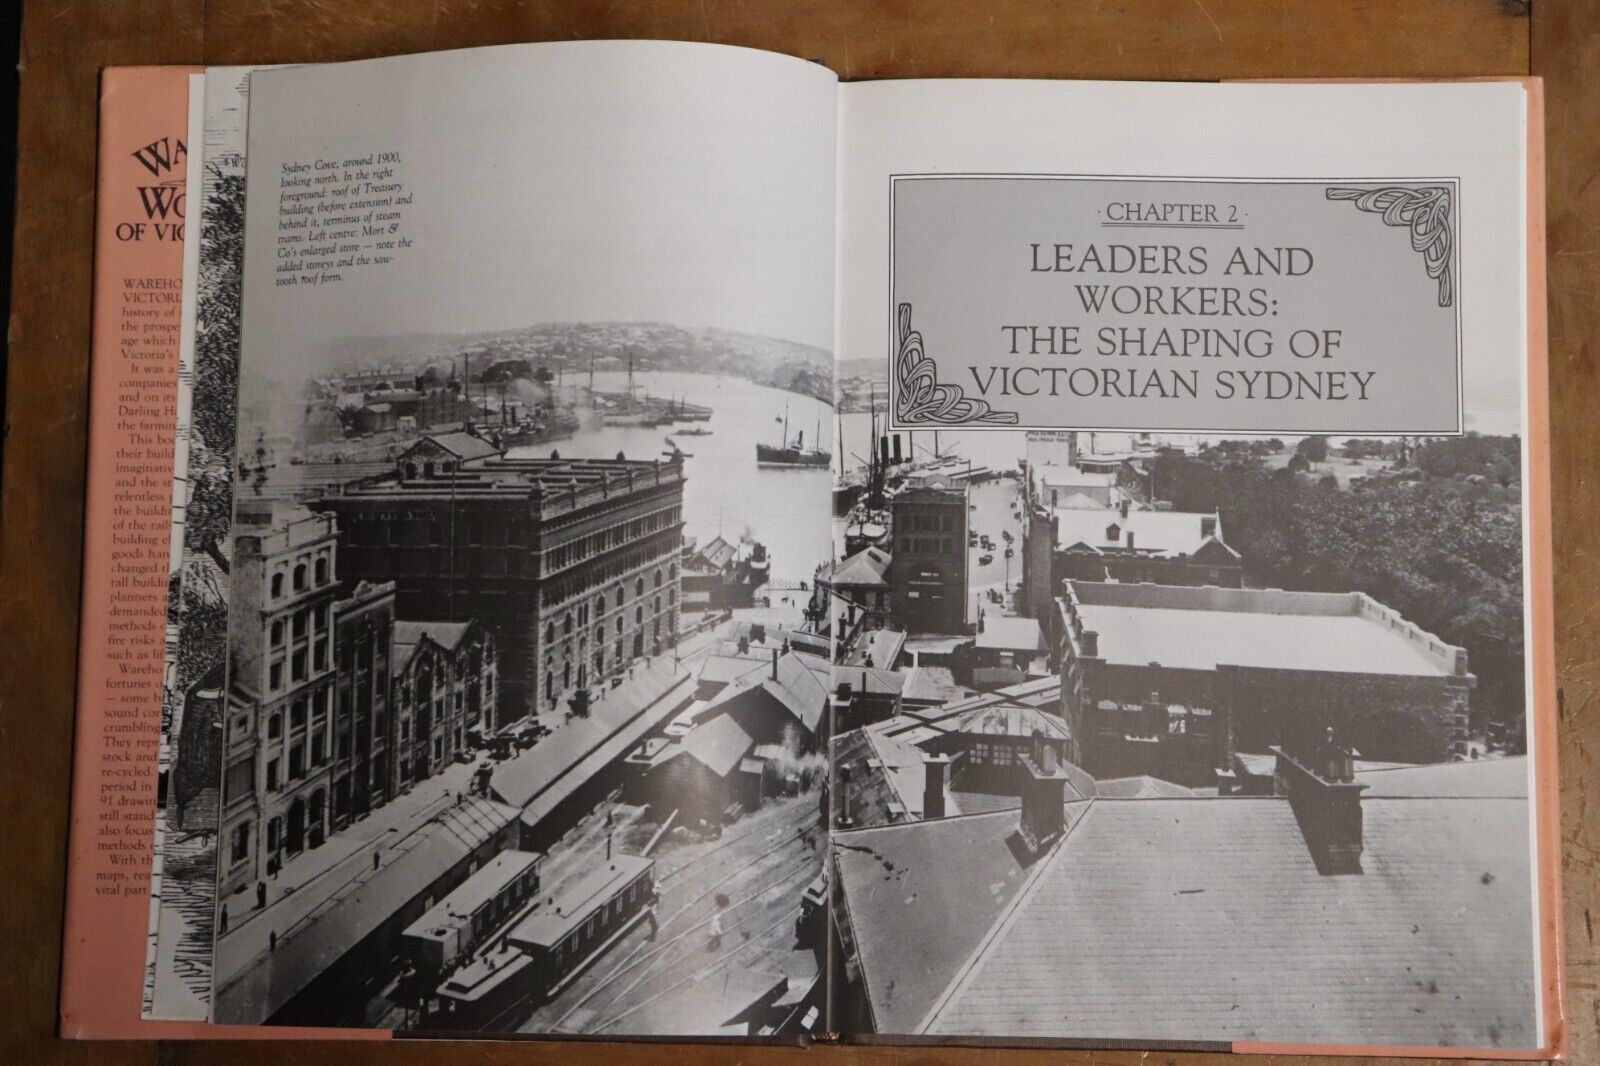 Warehouses & Woolstores of Victorian Sydney - 1982 - Australian History Book